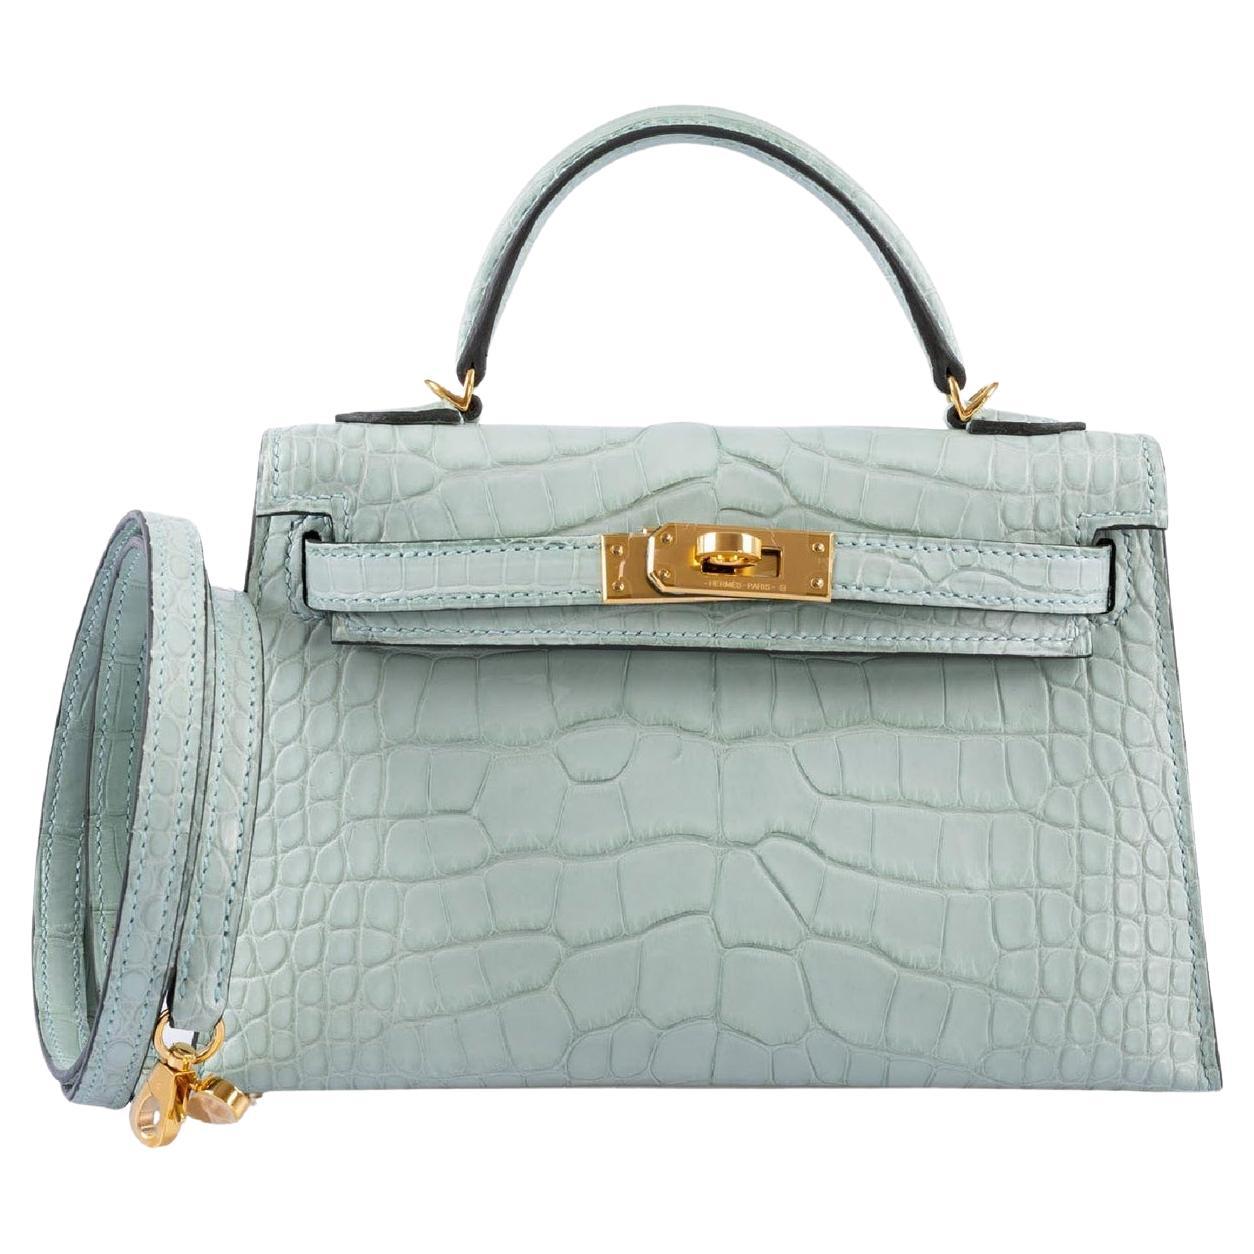 Hermès 'Kelly 35 Natural' Bag